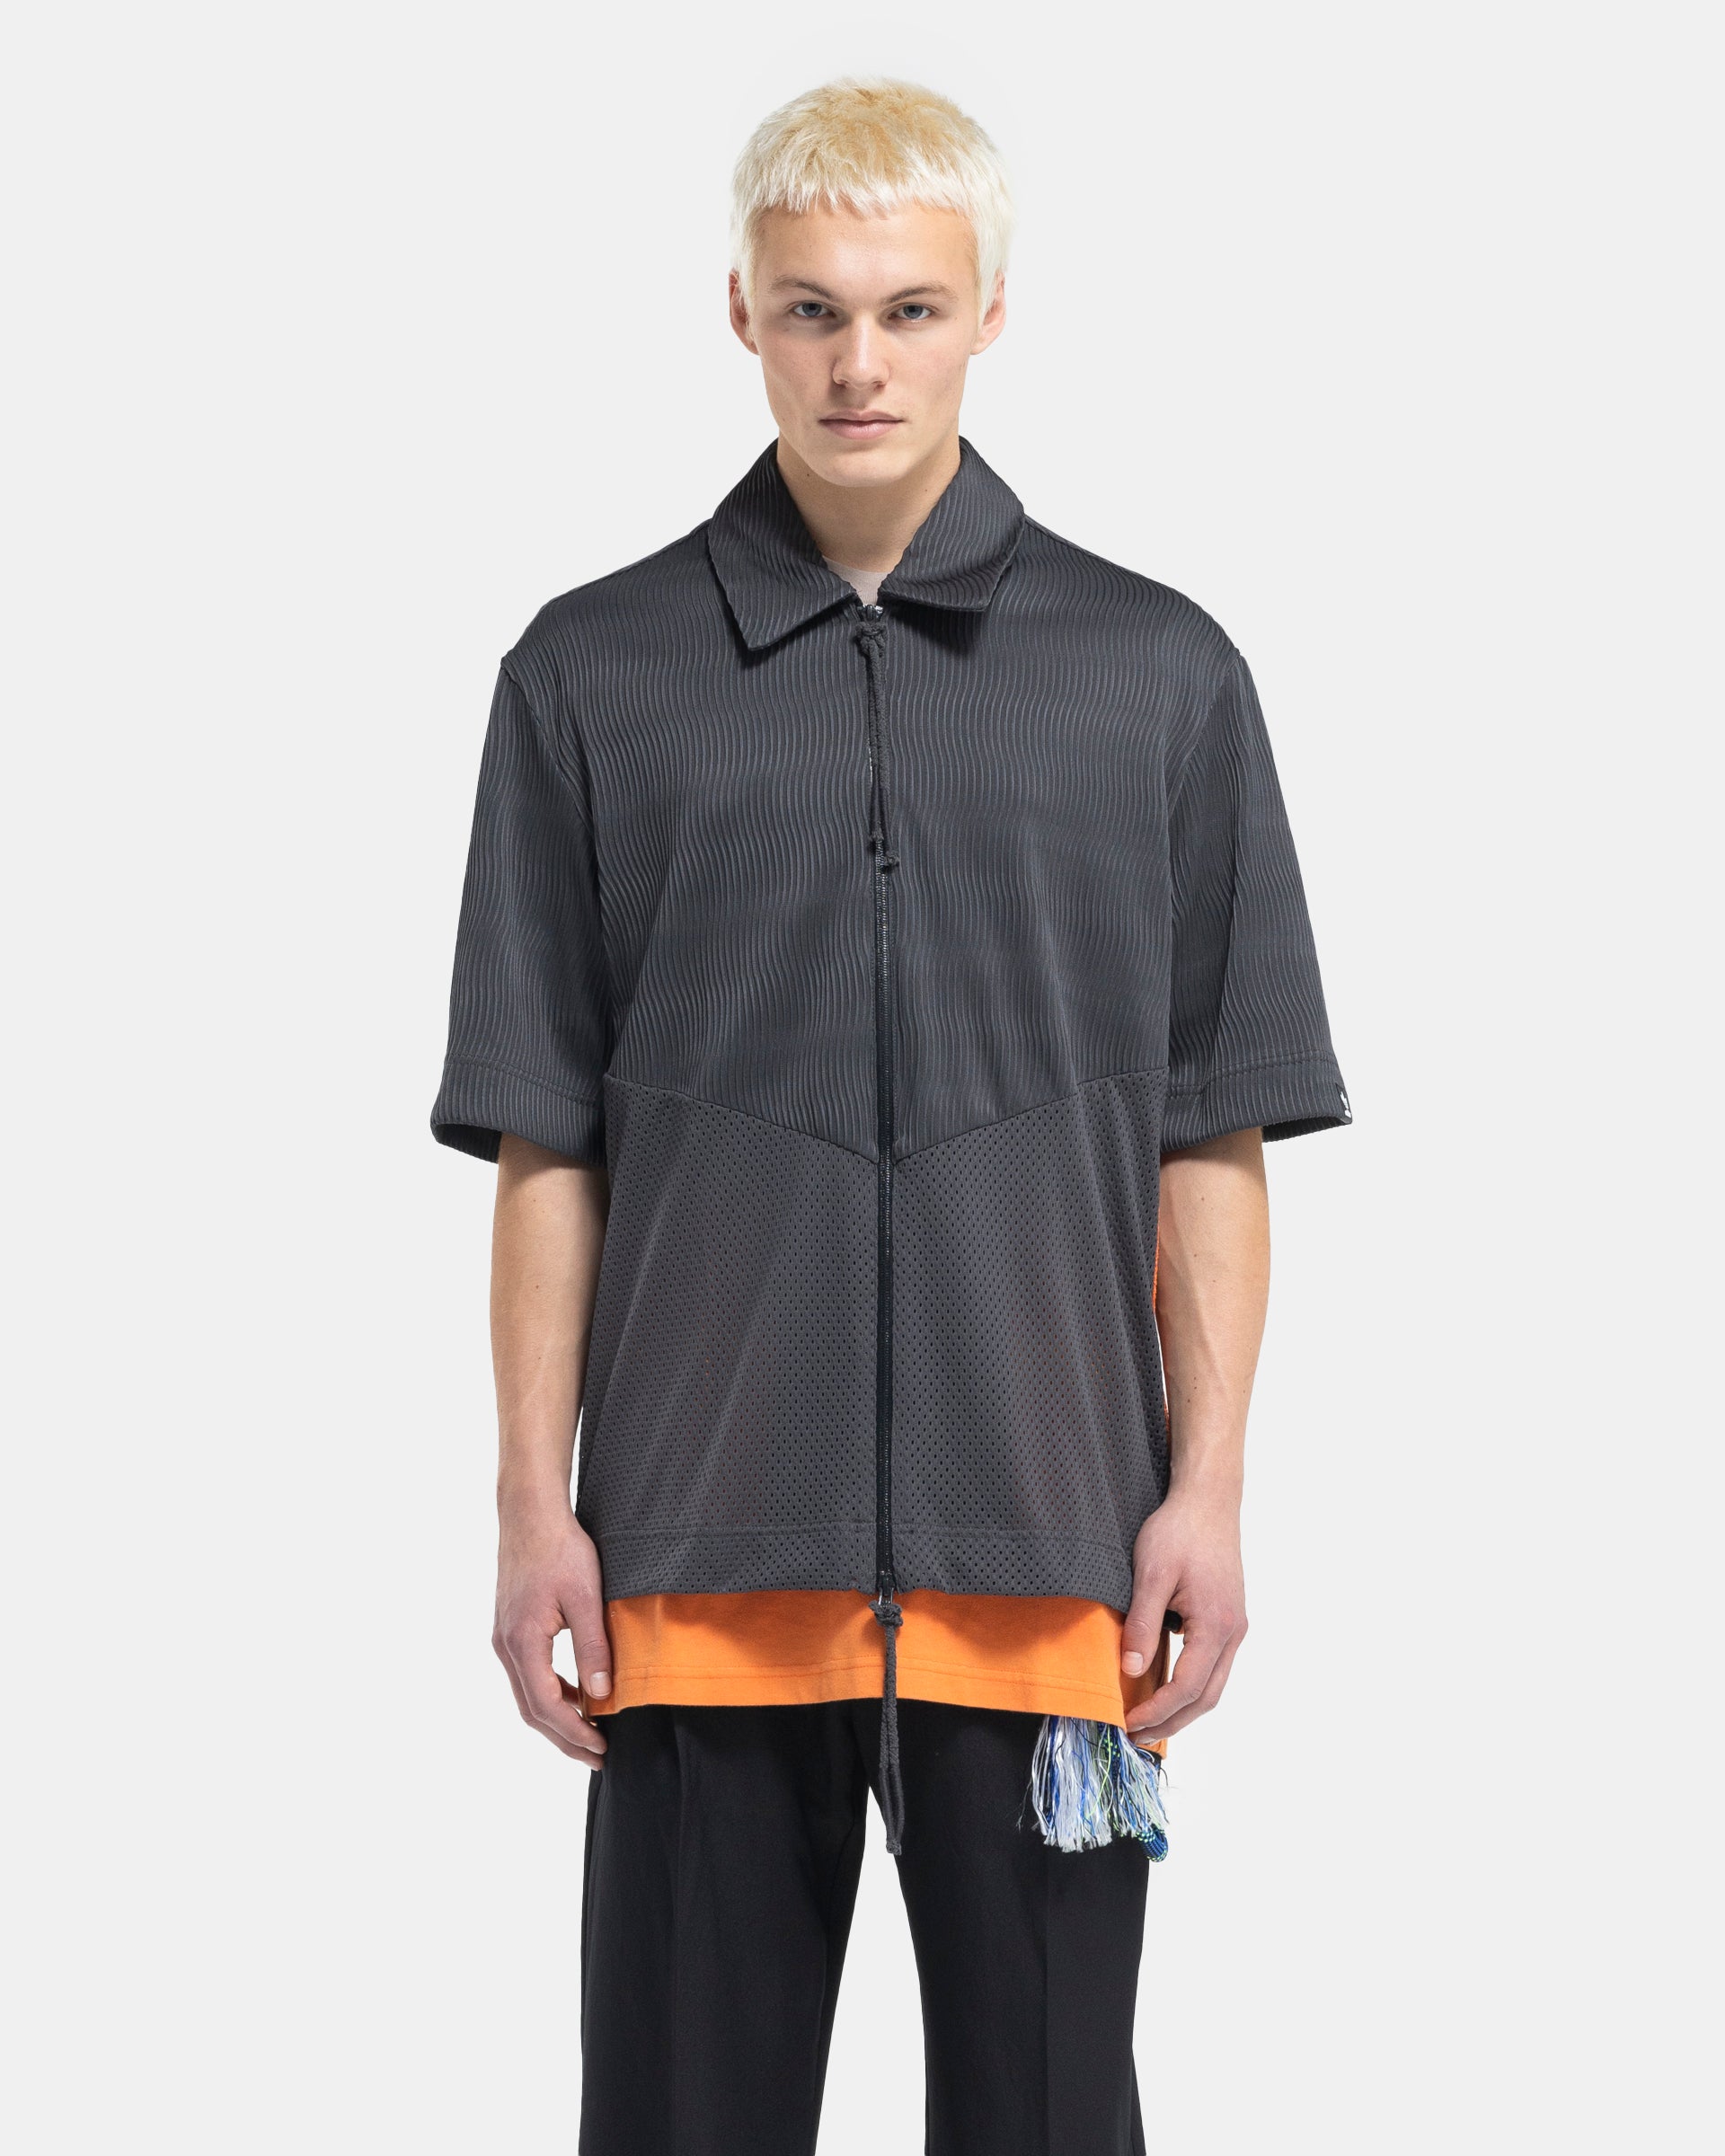 SFTM Short Sleeve Shirt in Charcoal